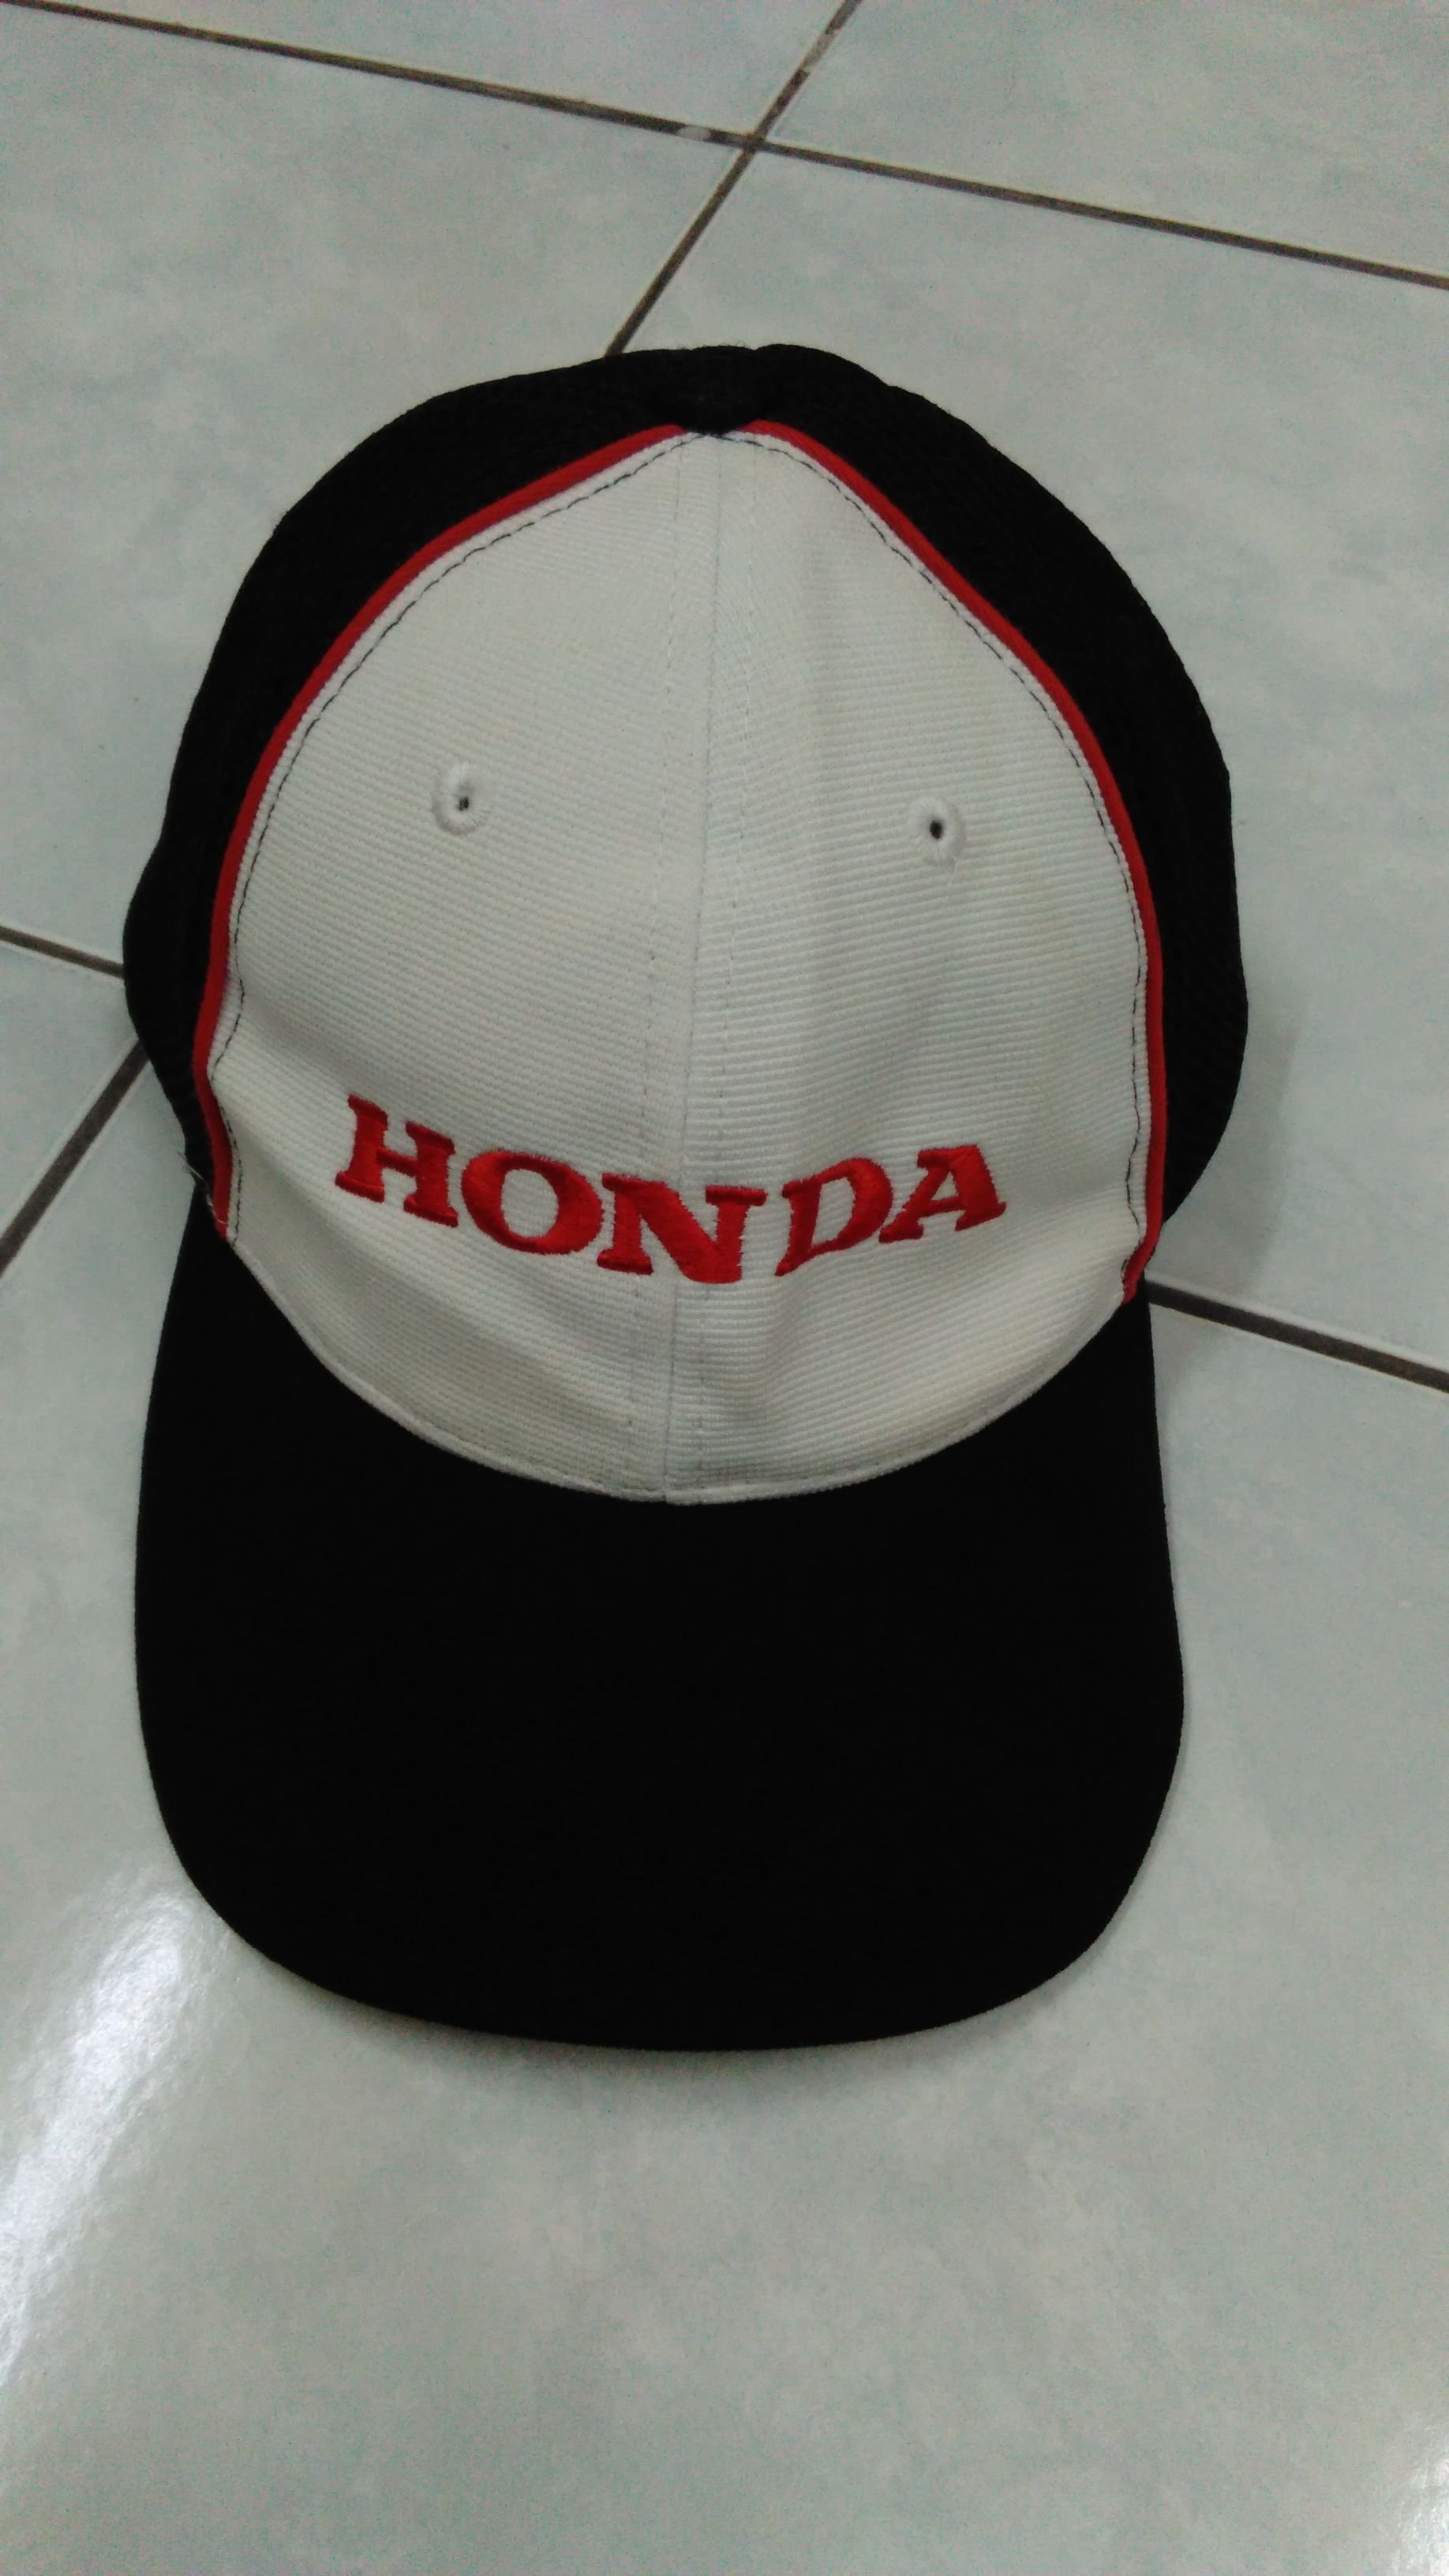 Honda HONDA Cap Hat racing Size ONE SIZE - 2 Preview